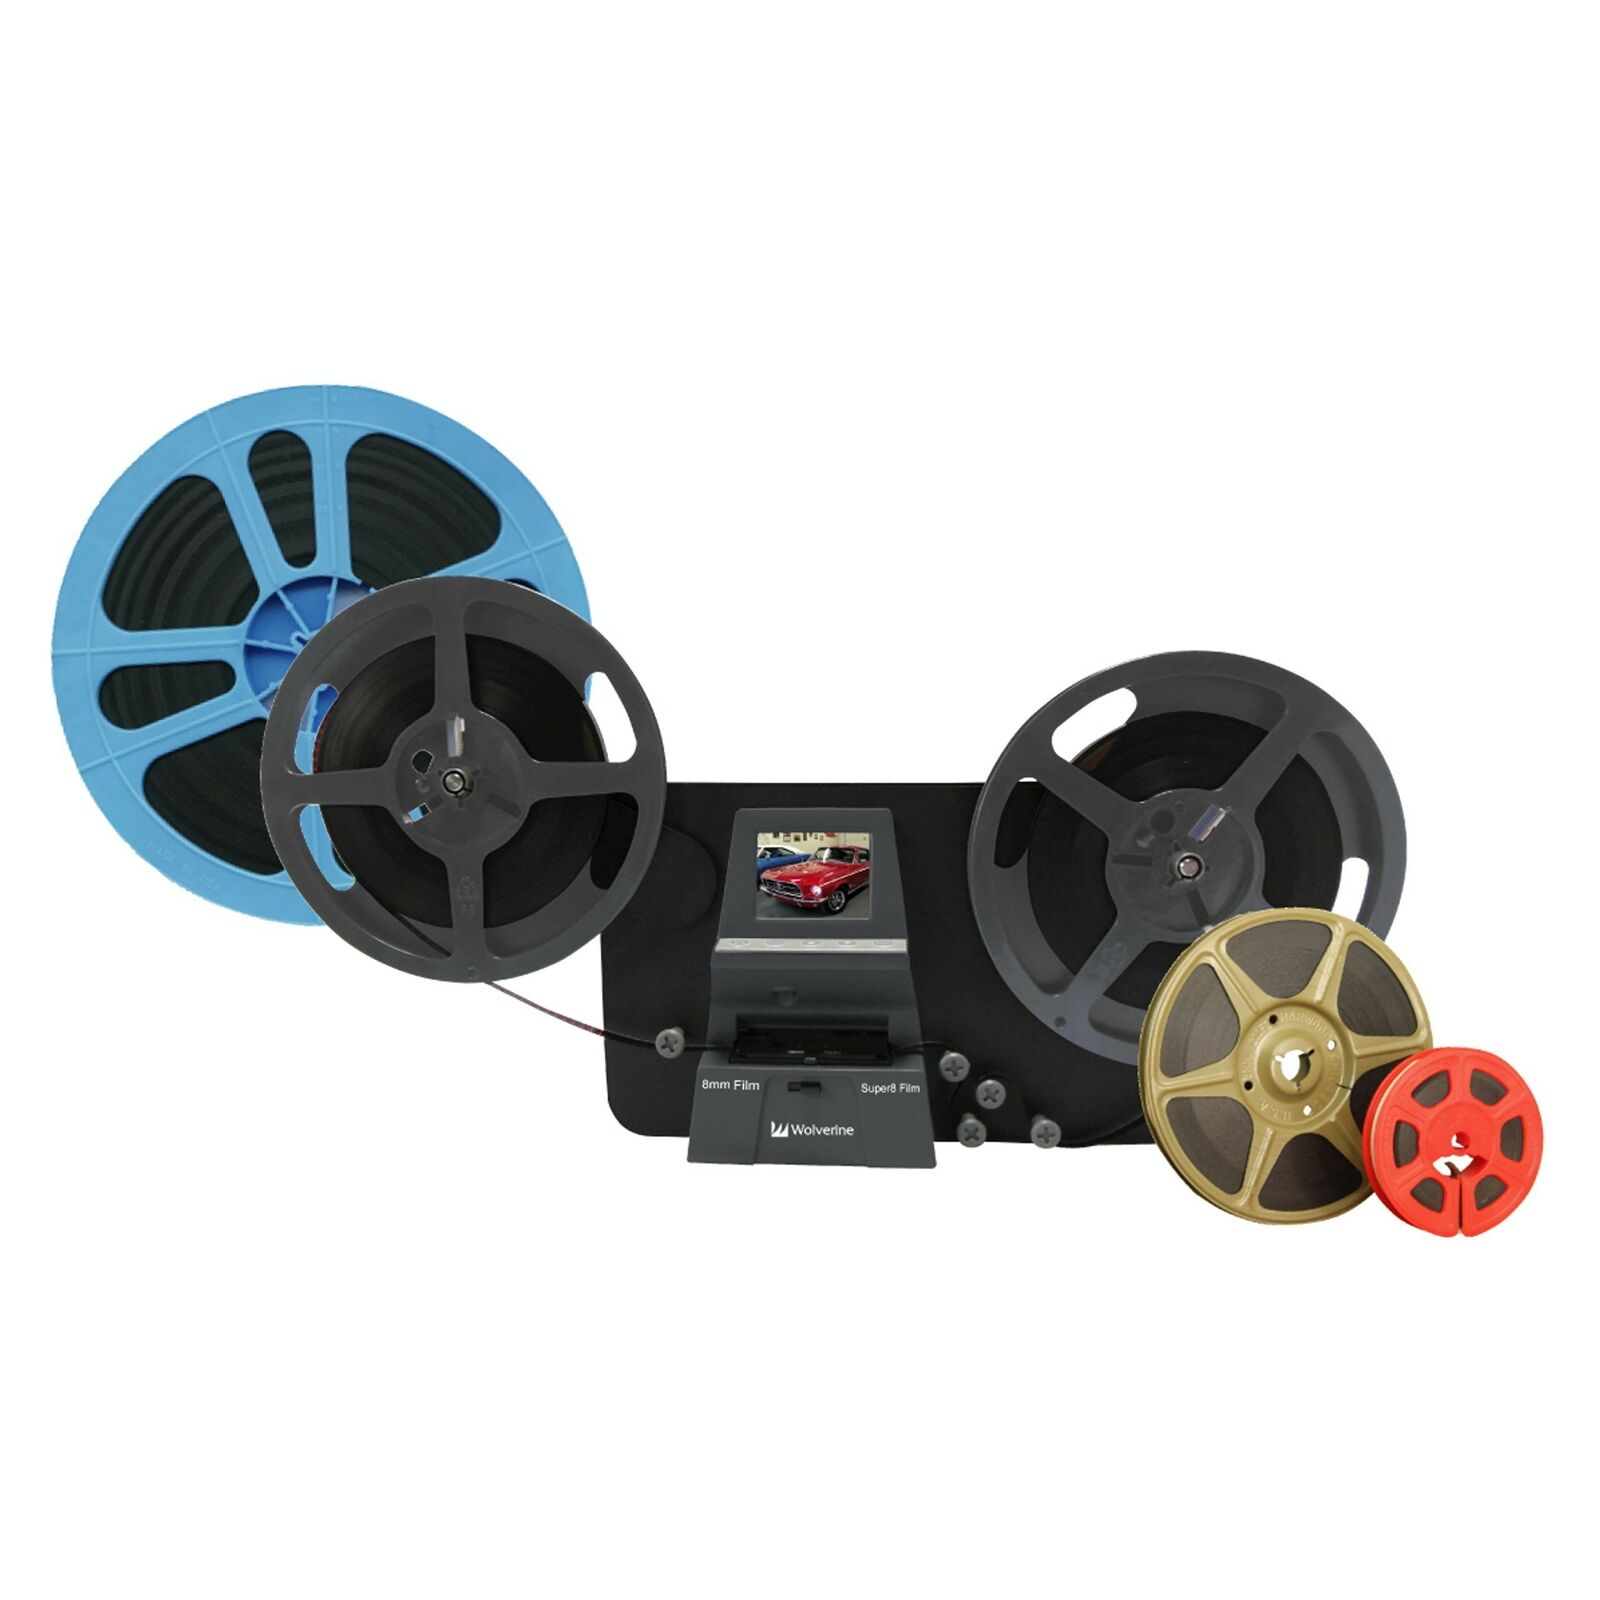 Wolverine Data Film2Digital MovieMaker-PRO 8mm and Super 8 Converter